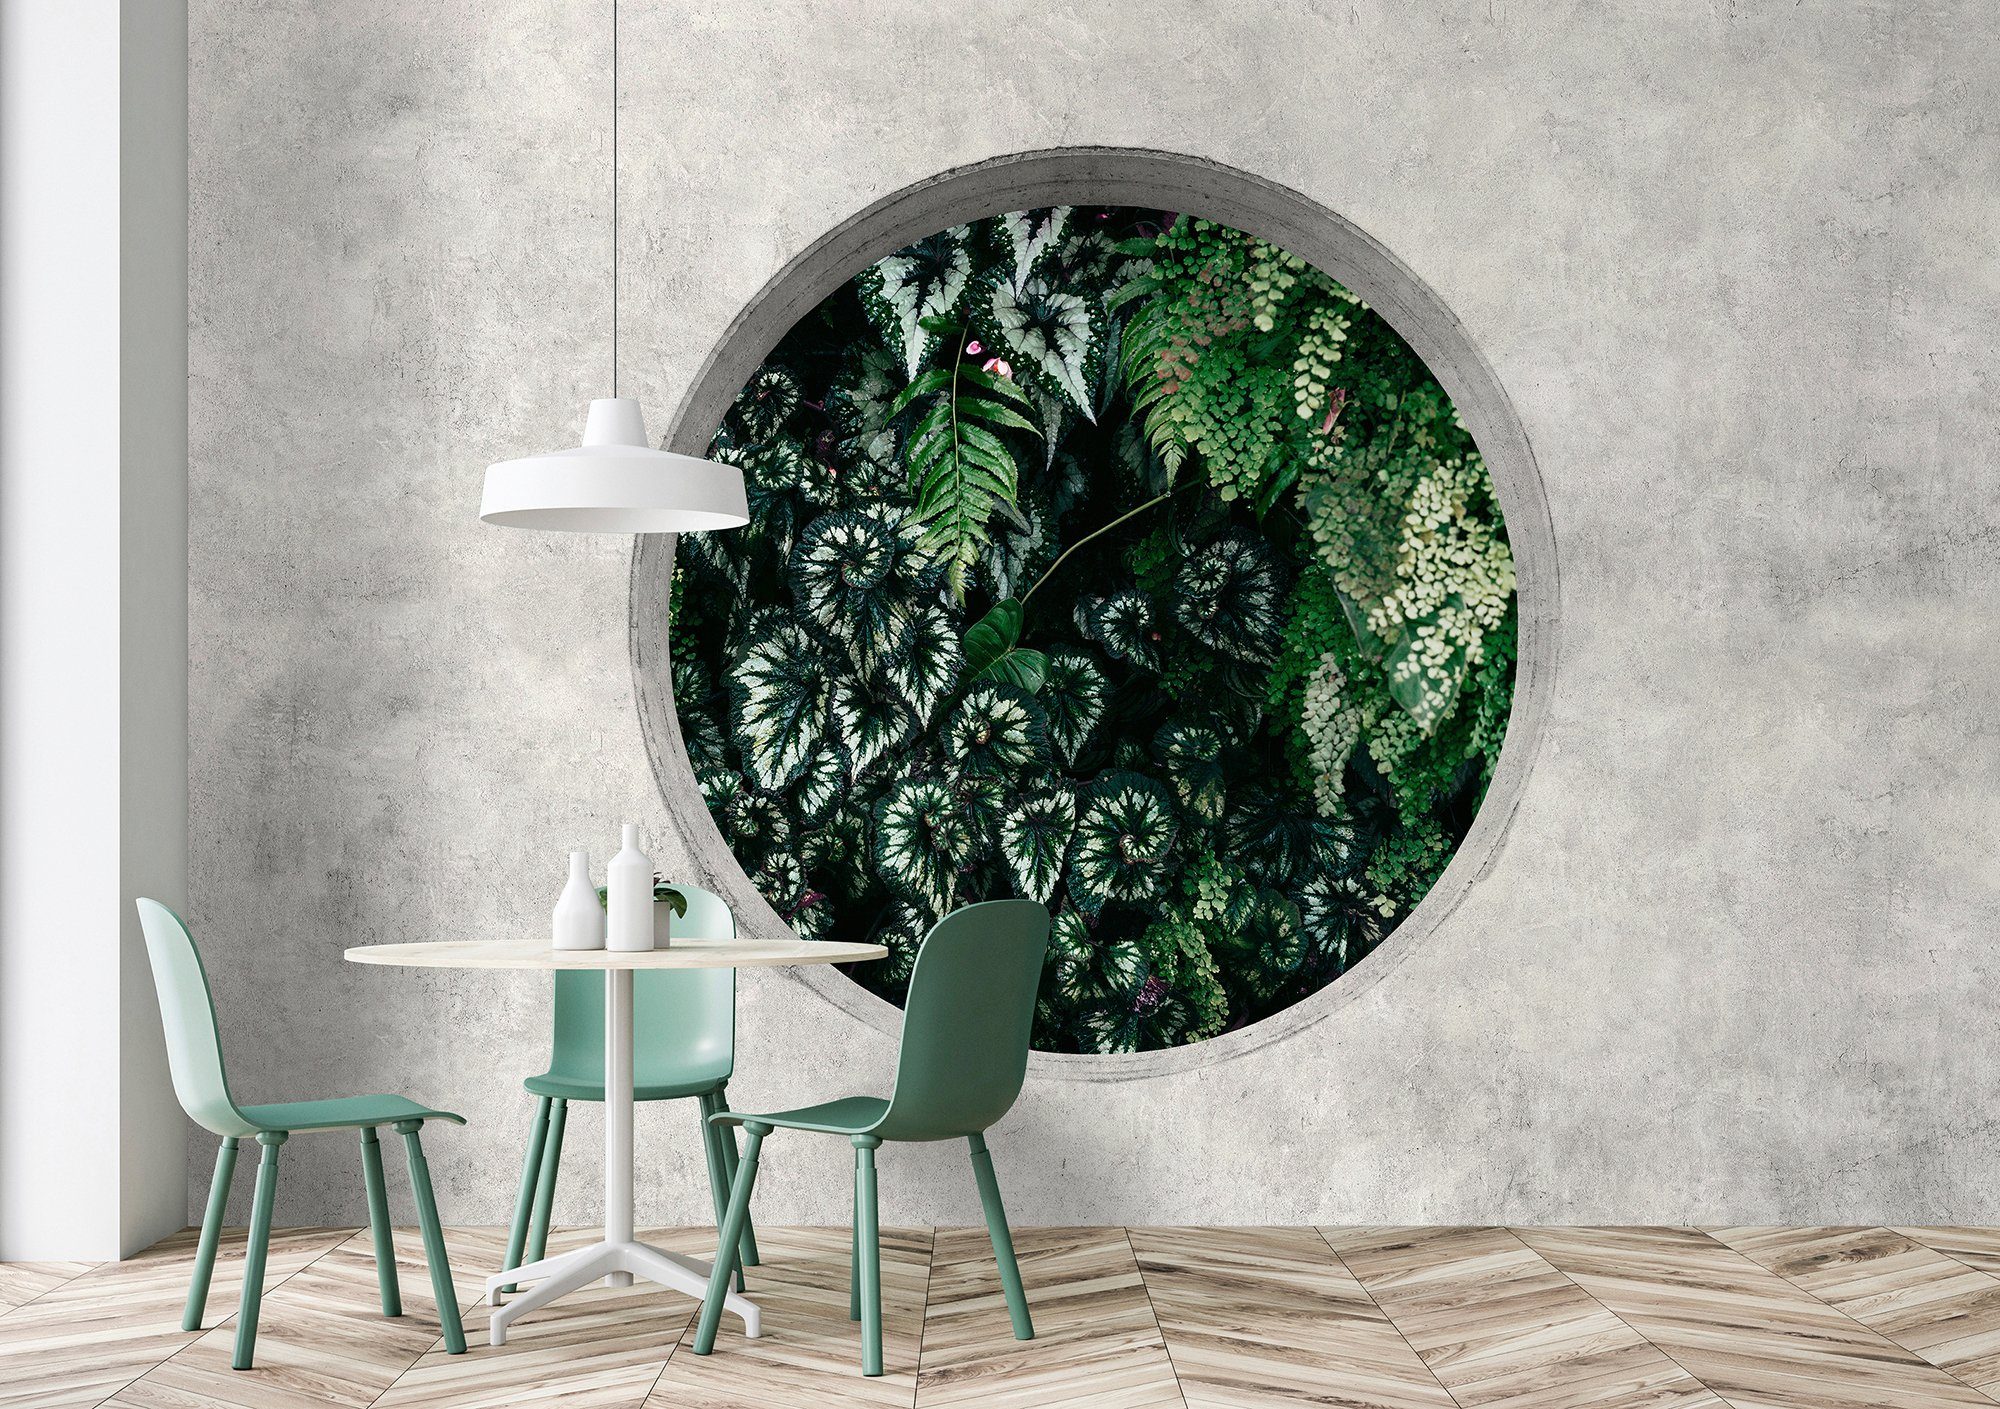 glatt, Deep walls Patel grün-grau living Fototapete Wand by Green, Walls Vlies,